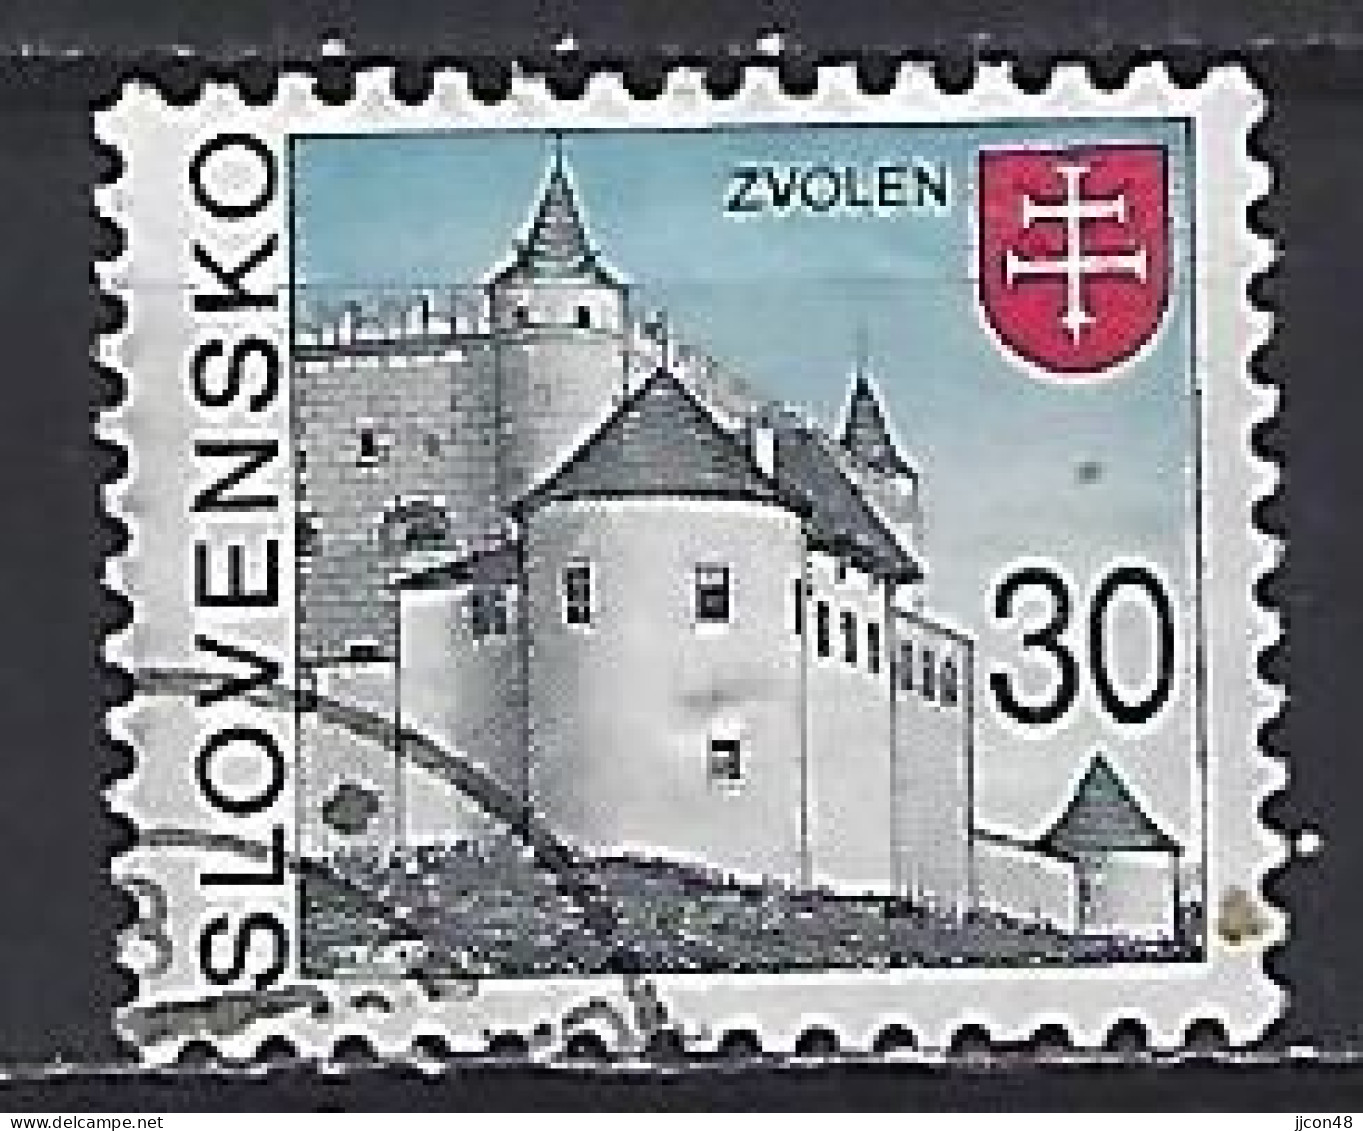 Slovakia 1993  City Arms; Zvolen (o) Mi.179 - Gebruikt